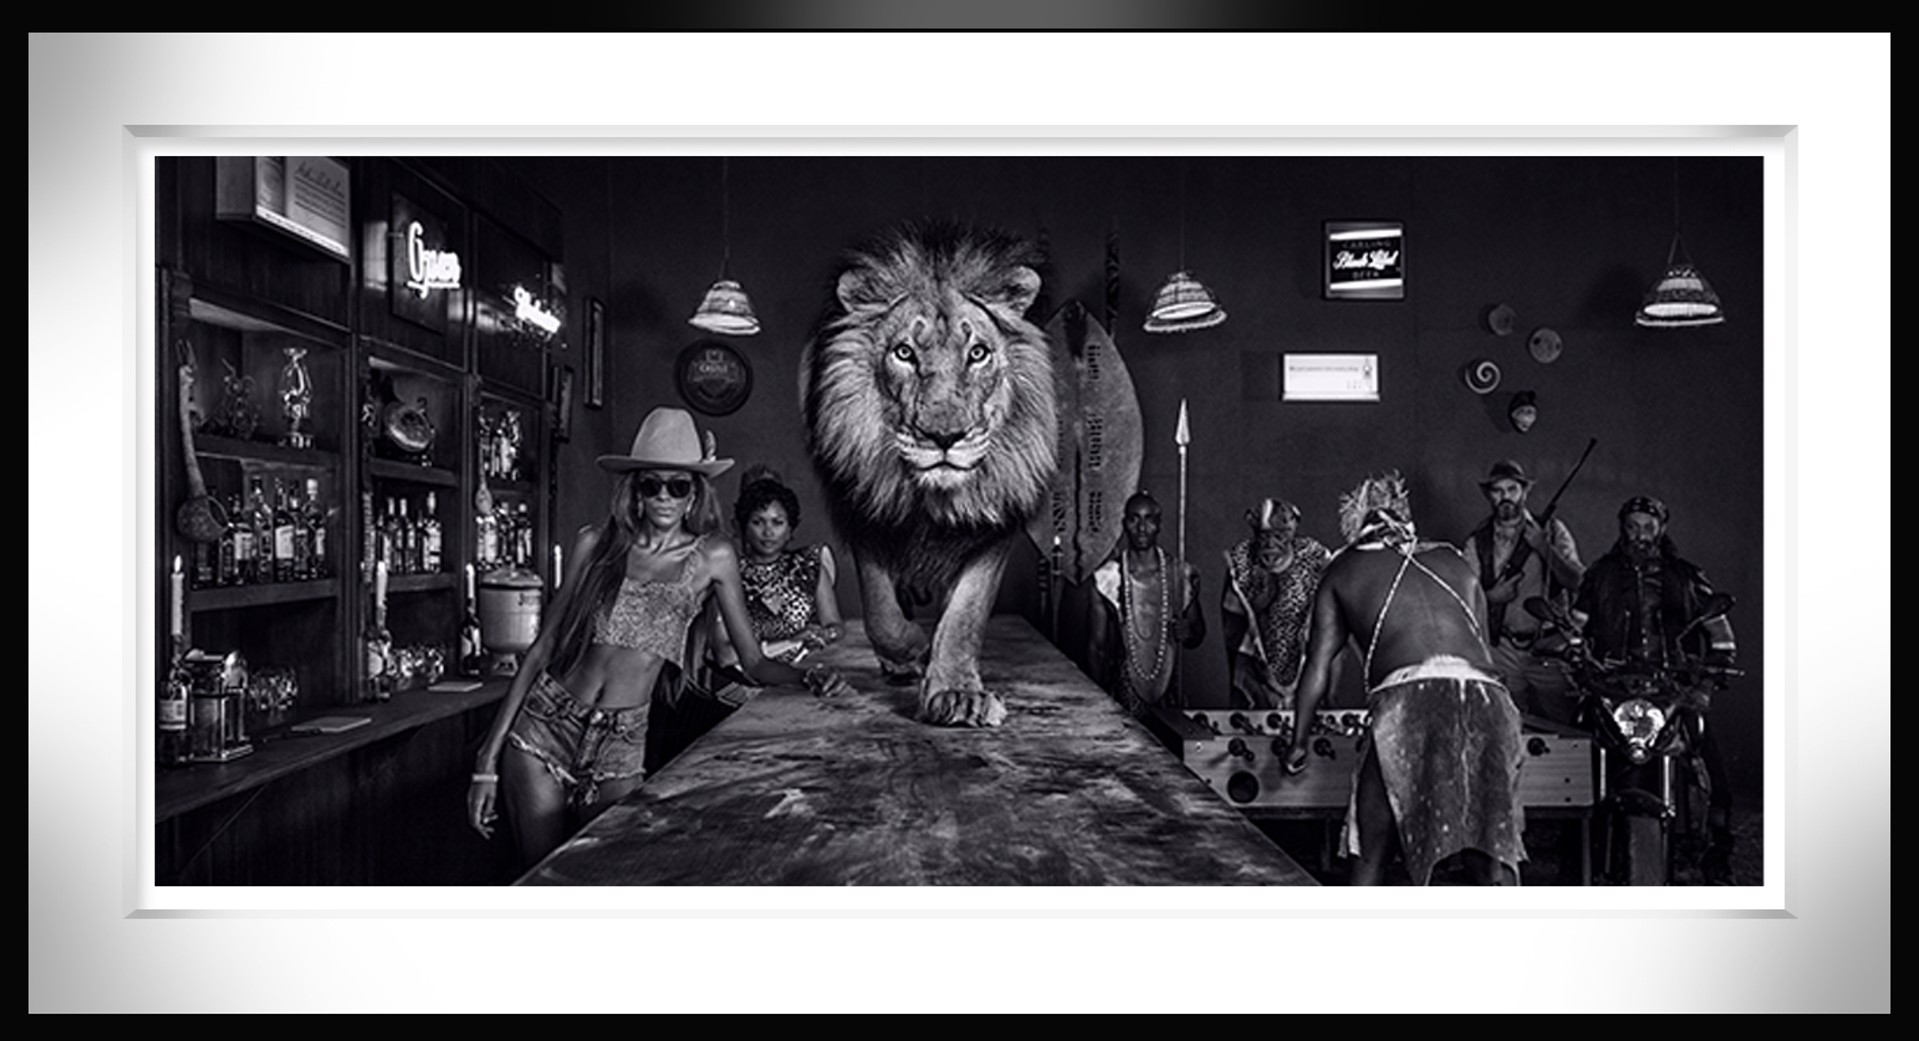 The Lion's Den by David Yarrow